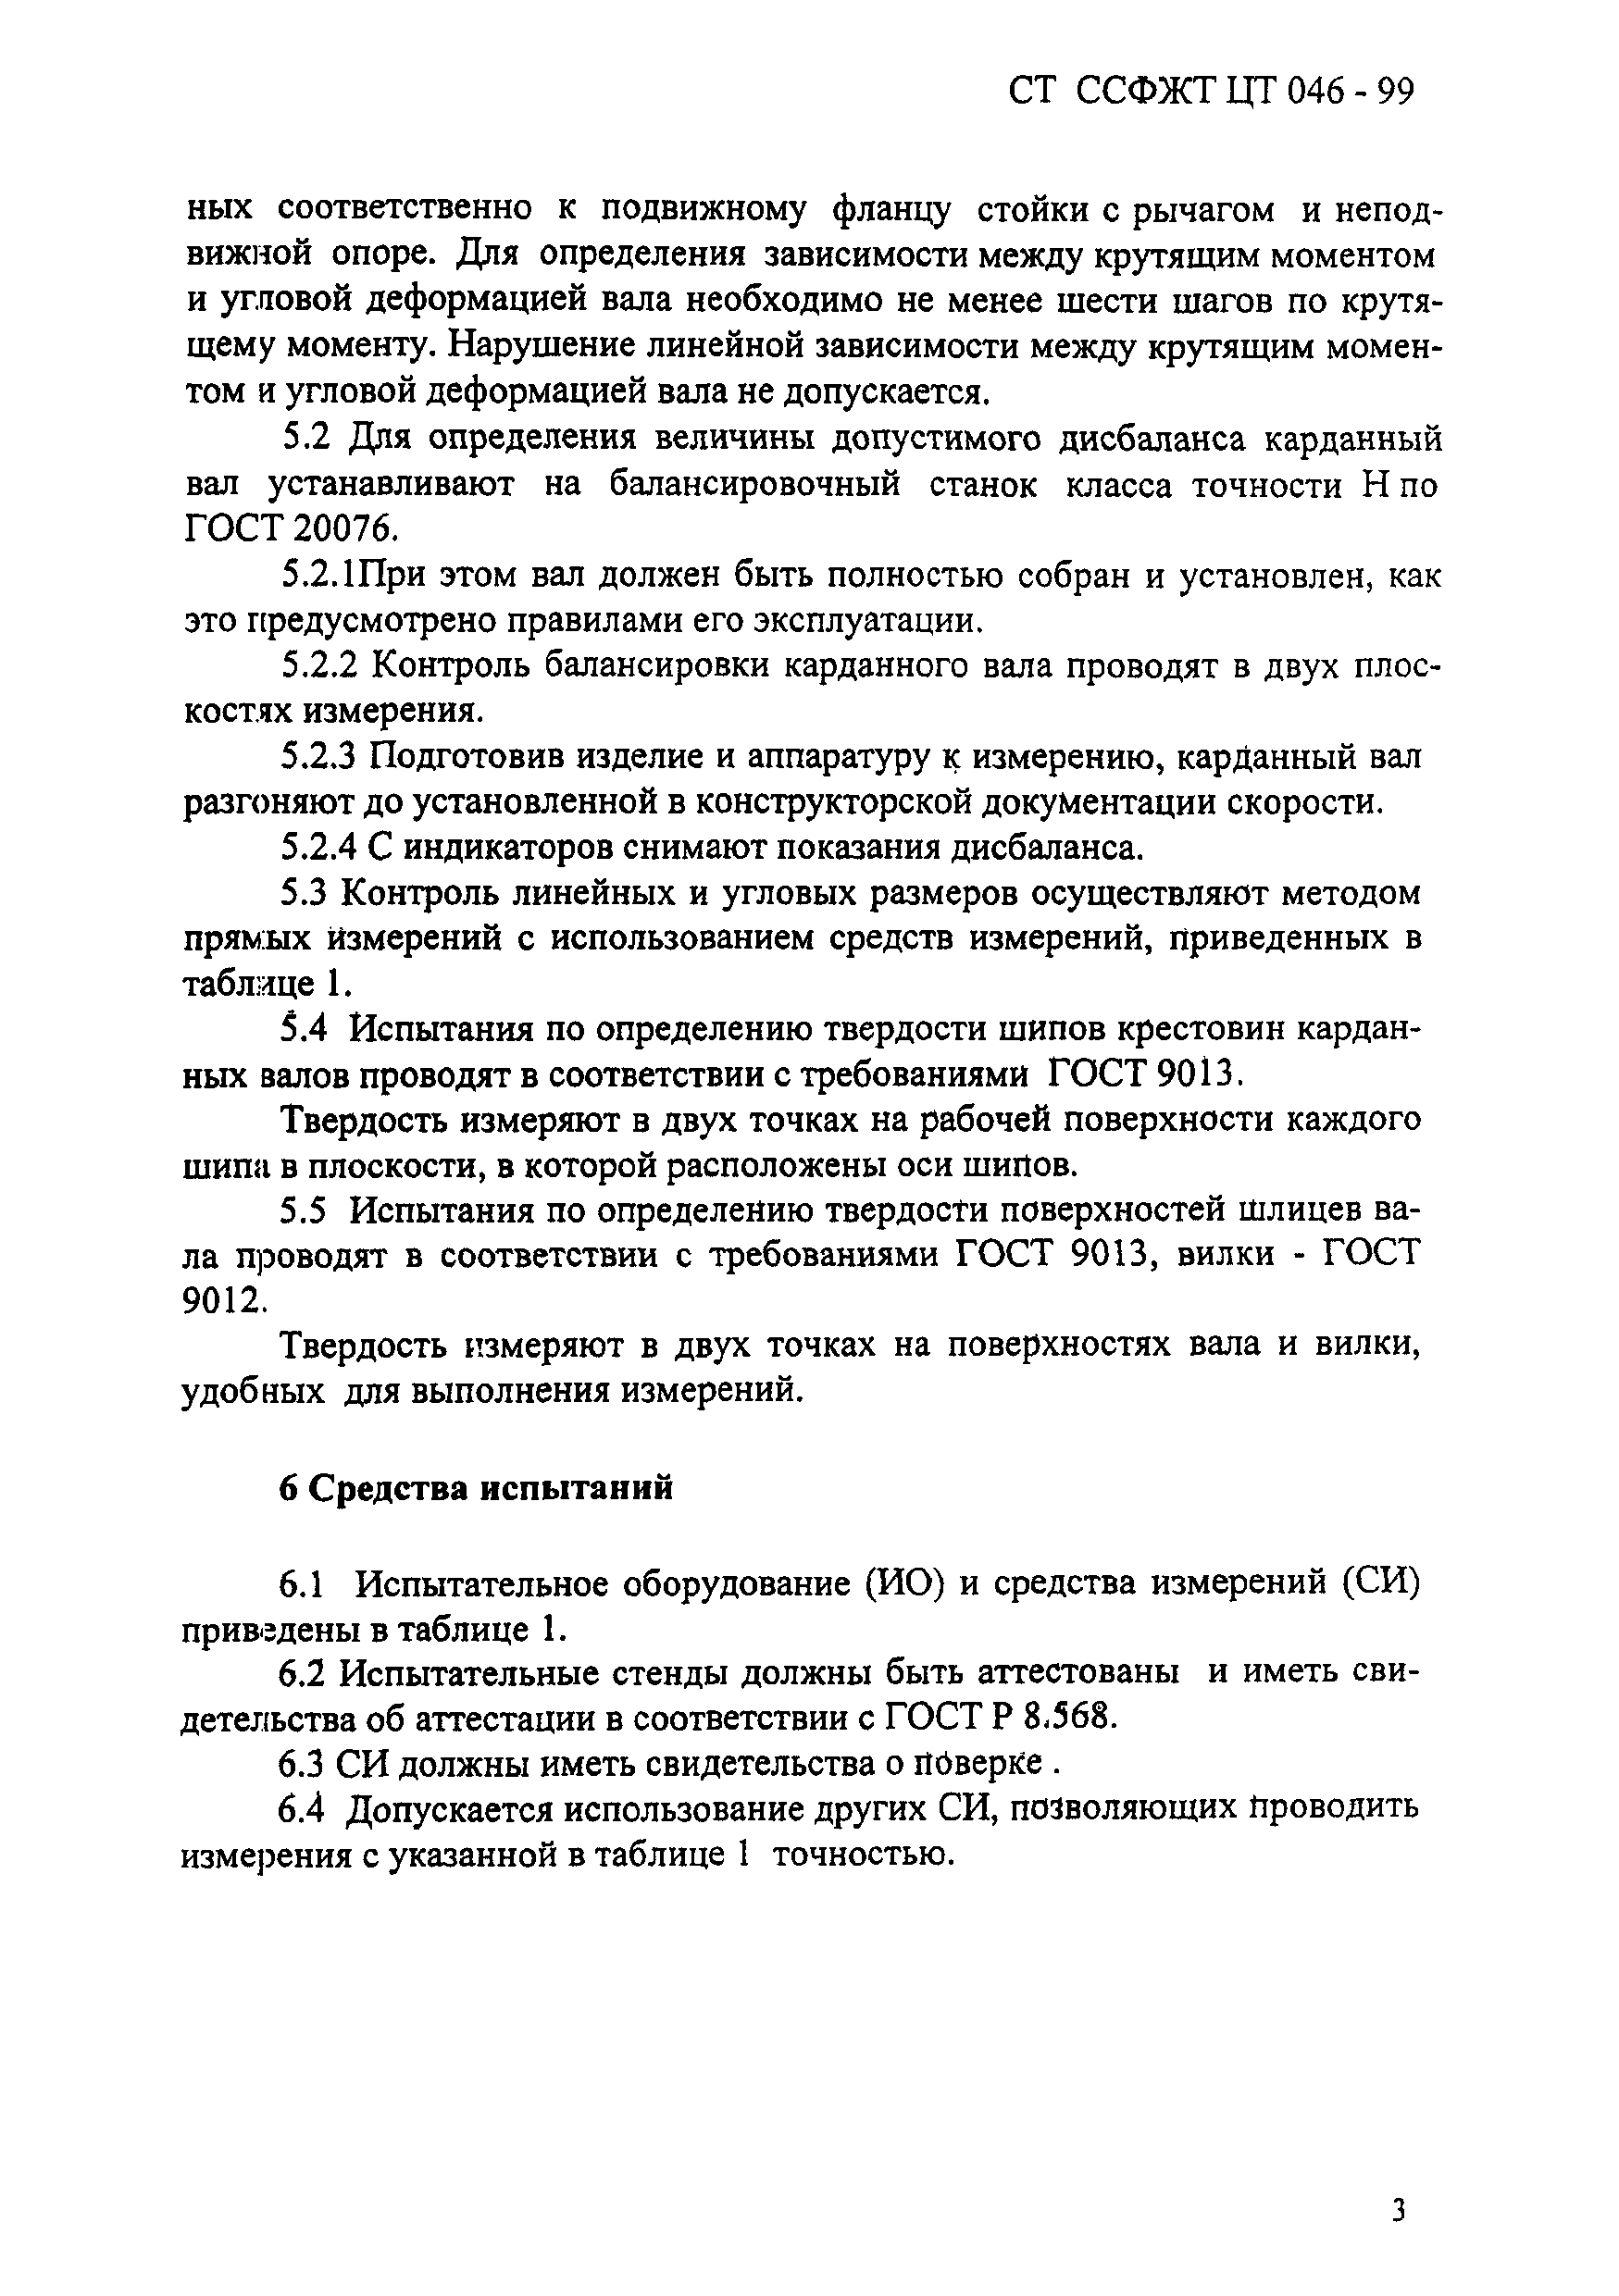 СТ ССФЖТ ЦТ 046-99